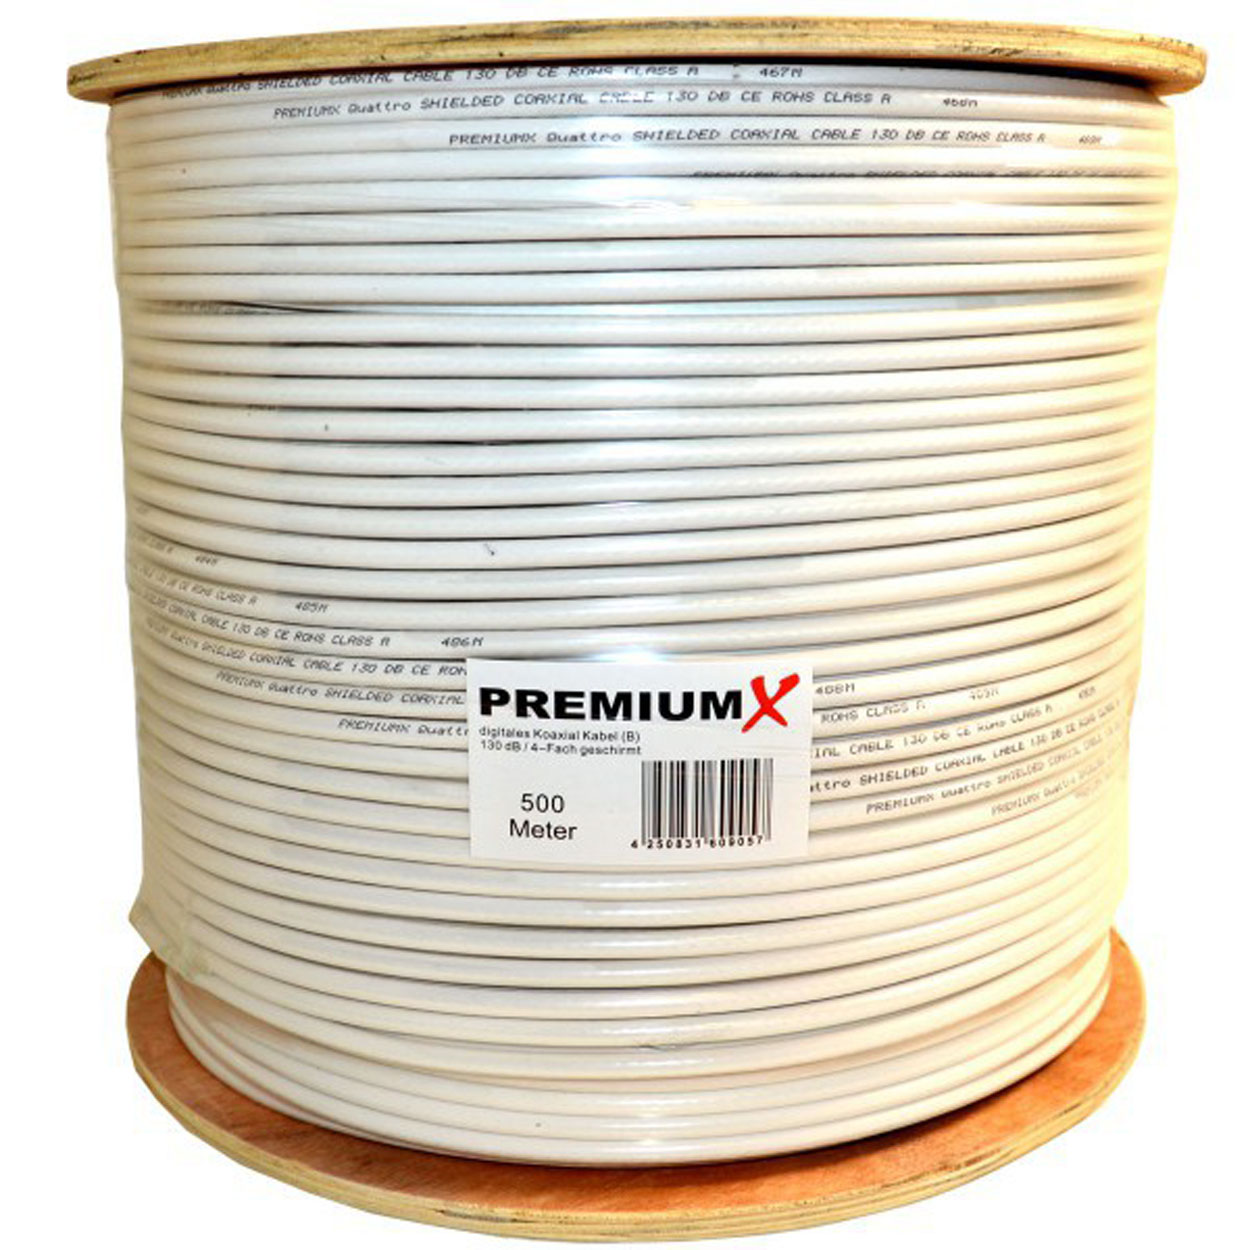 PREMIUMX 500m BASIC 135dB 4-fach SAT Koax Kabel F-Stecker 50x Antennenkabel Koaxialkabel